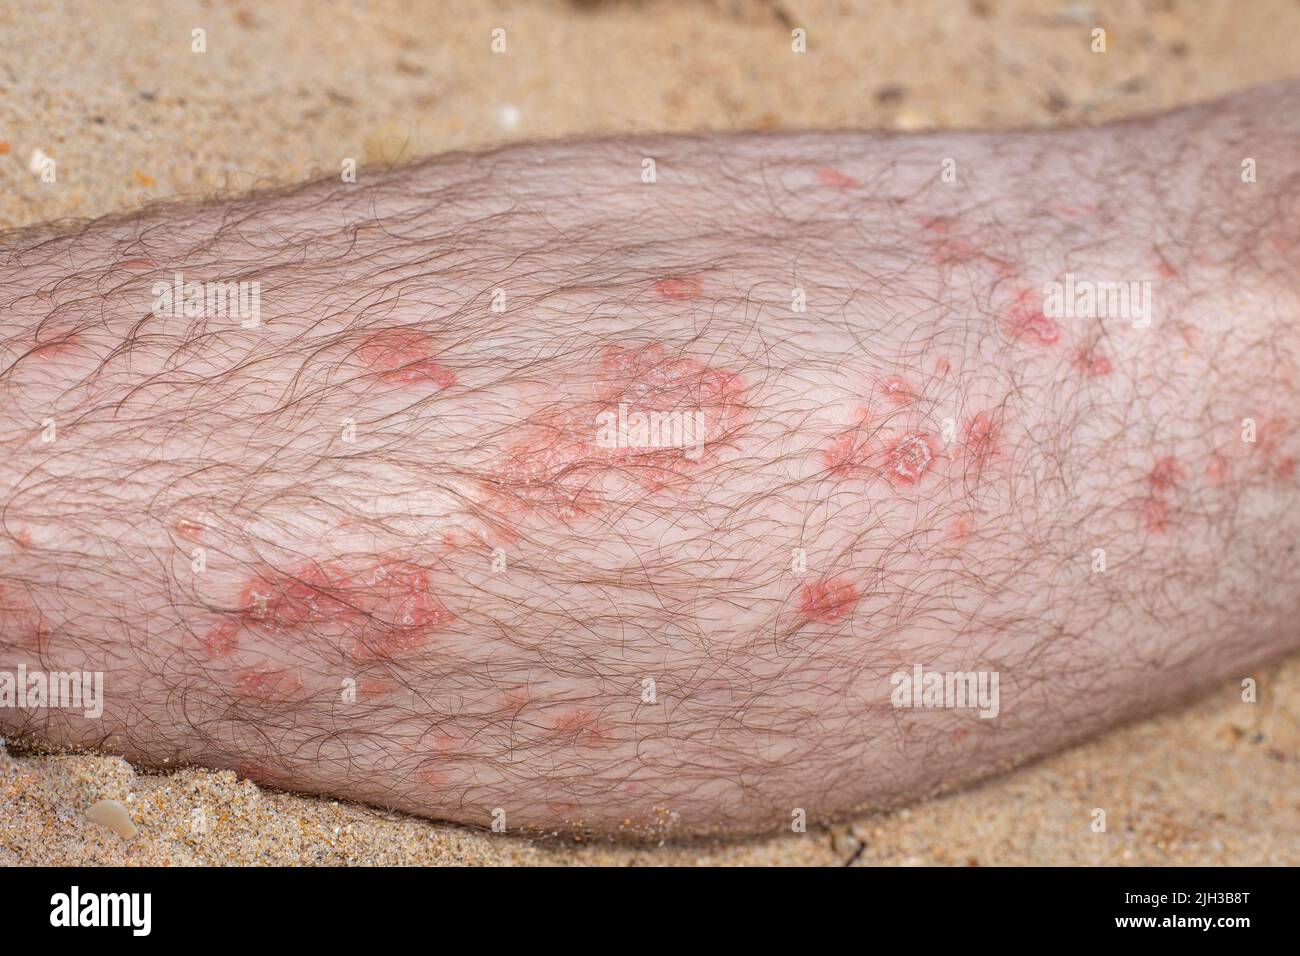 530+ Skin Rash Leg Stock Photos, Pictures & Royalty-Free Images